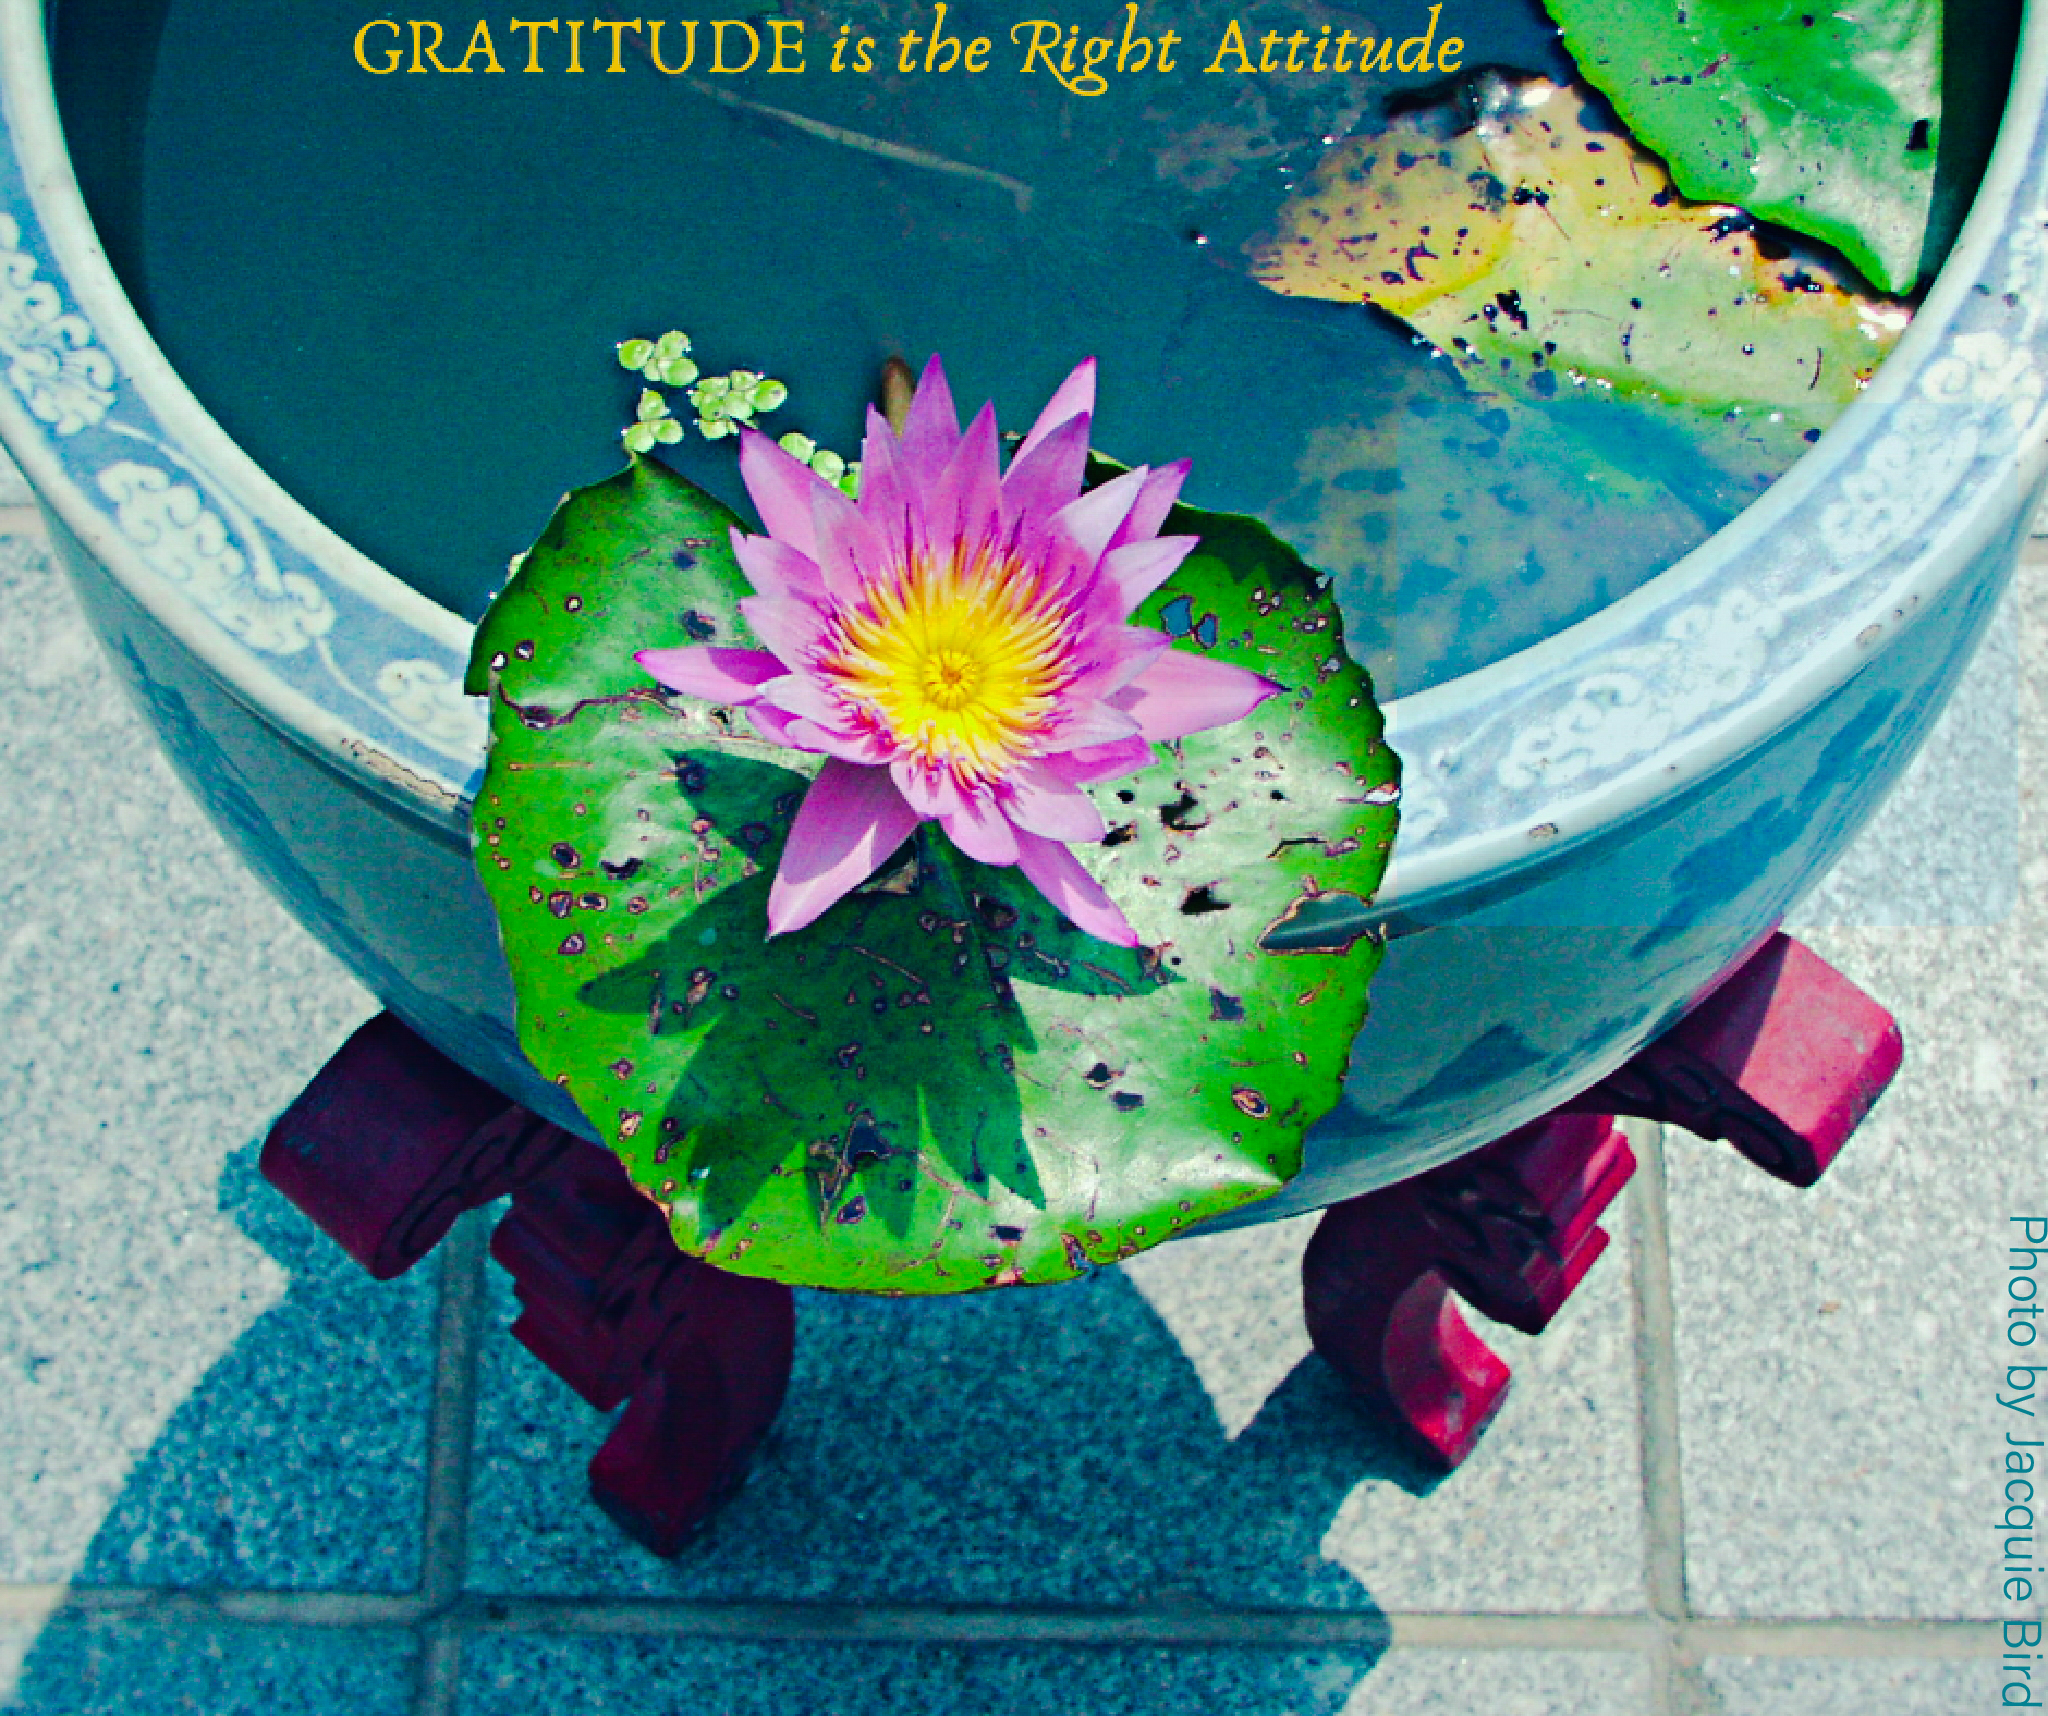 Gratitude is the right attitude by Jacquie Bird, Spiritual Wellness